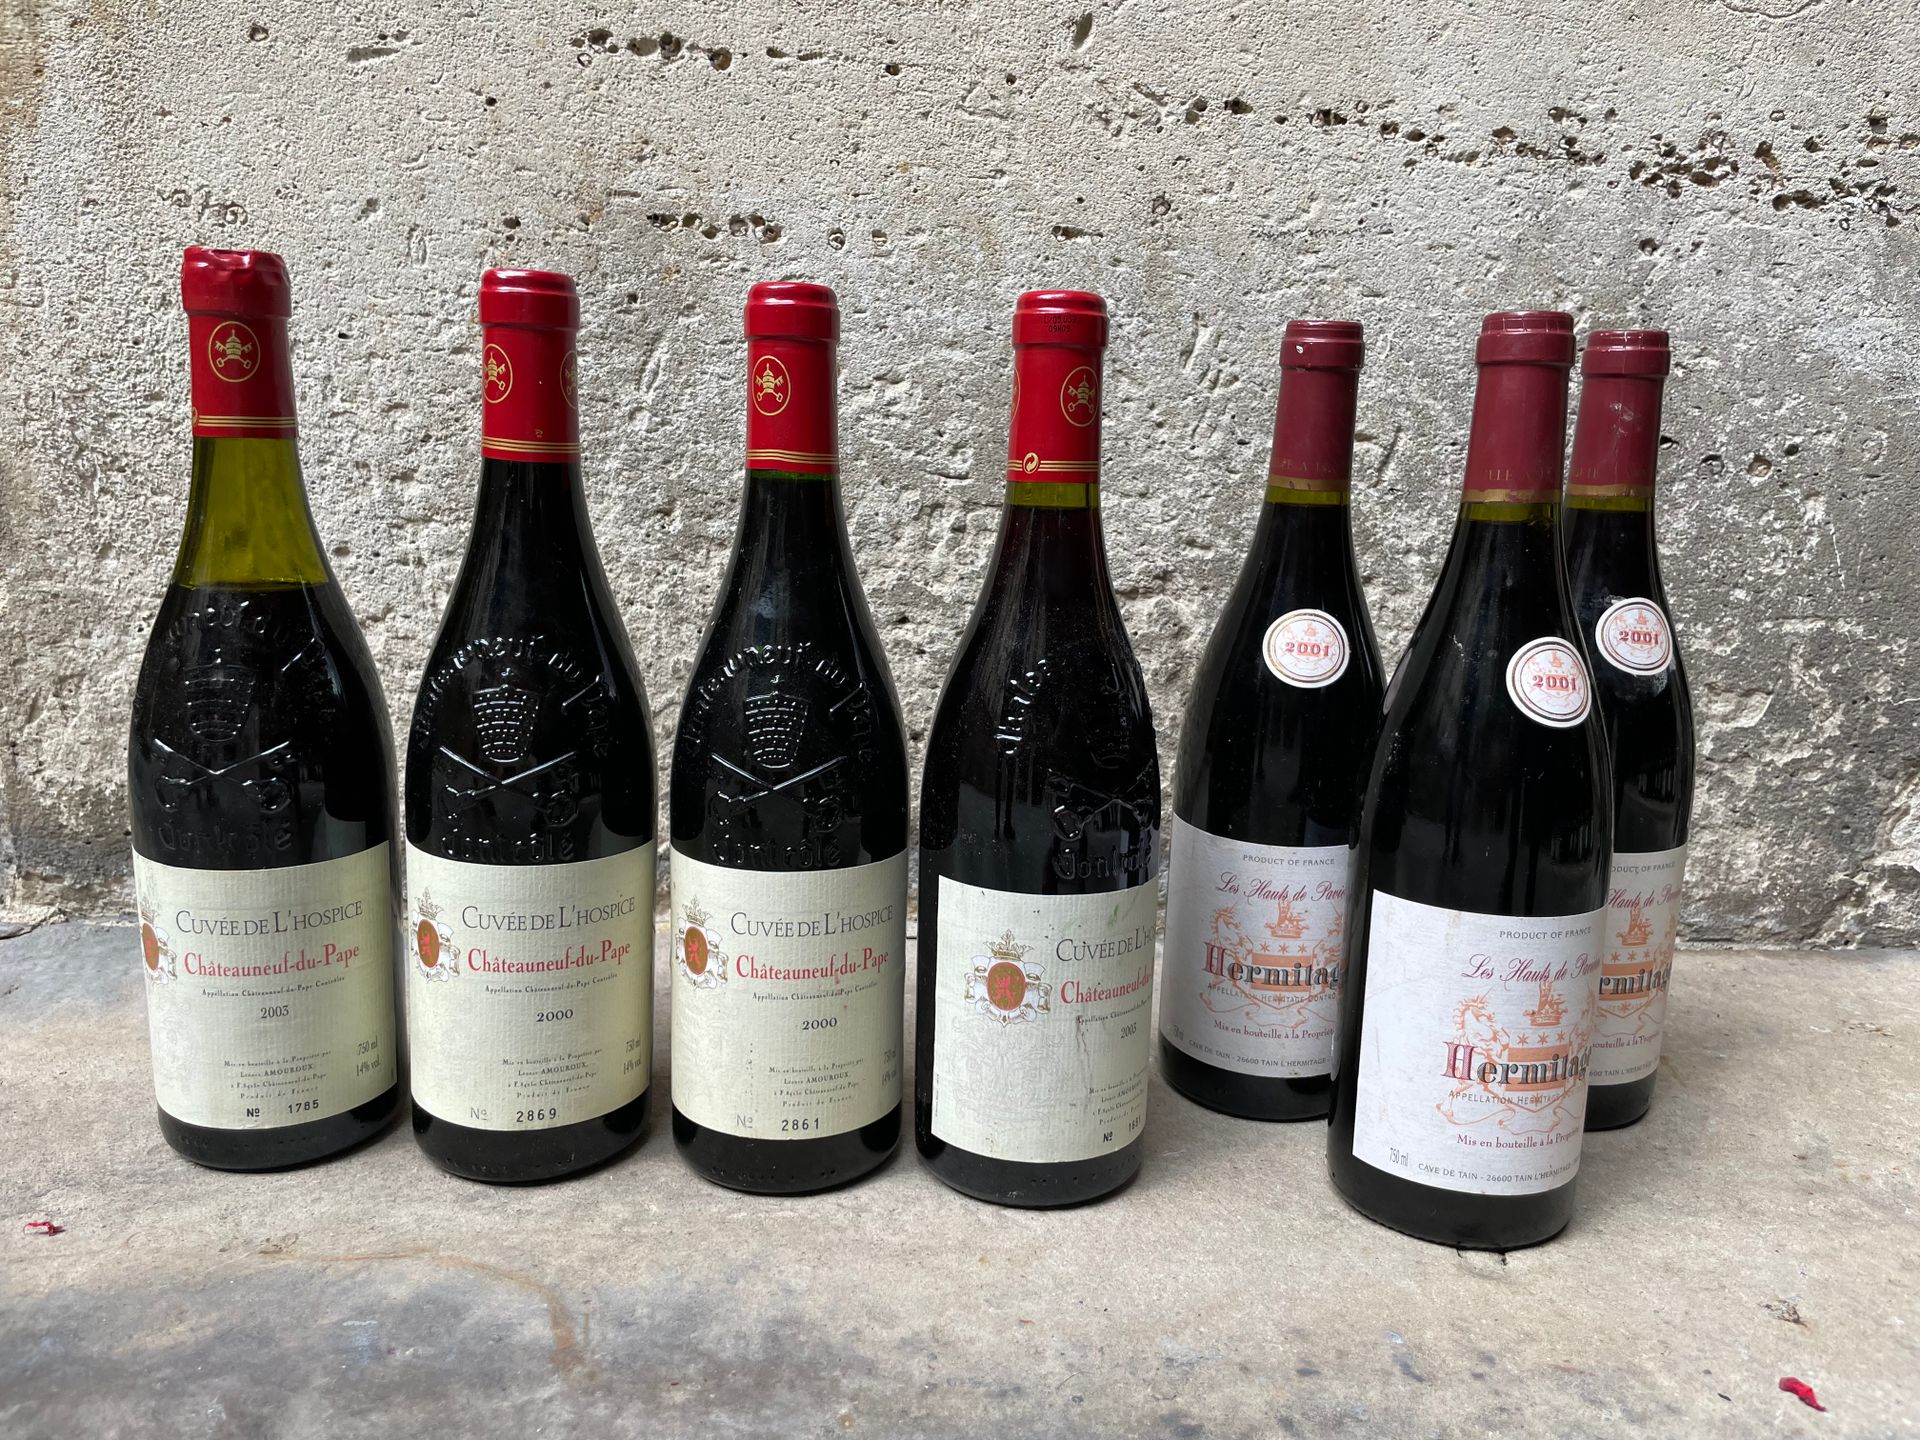 Null Batch of 7 bottles
Including 4 bottles of Hospis Châteauneuf du pape 2000
A&hellip;